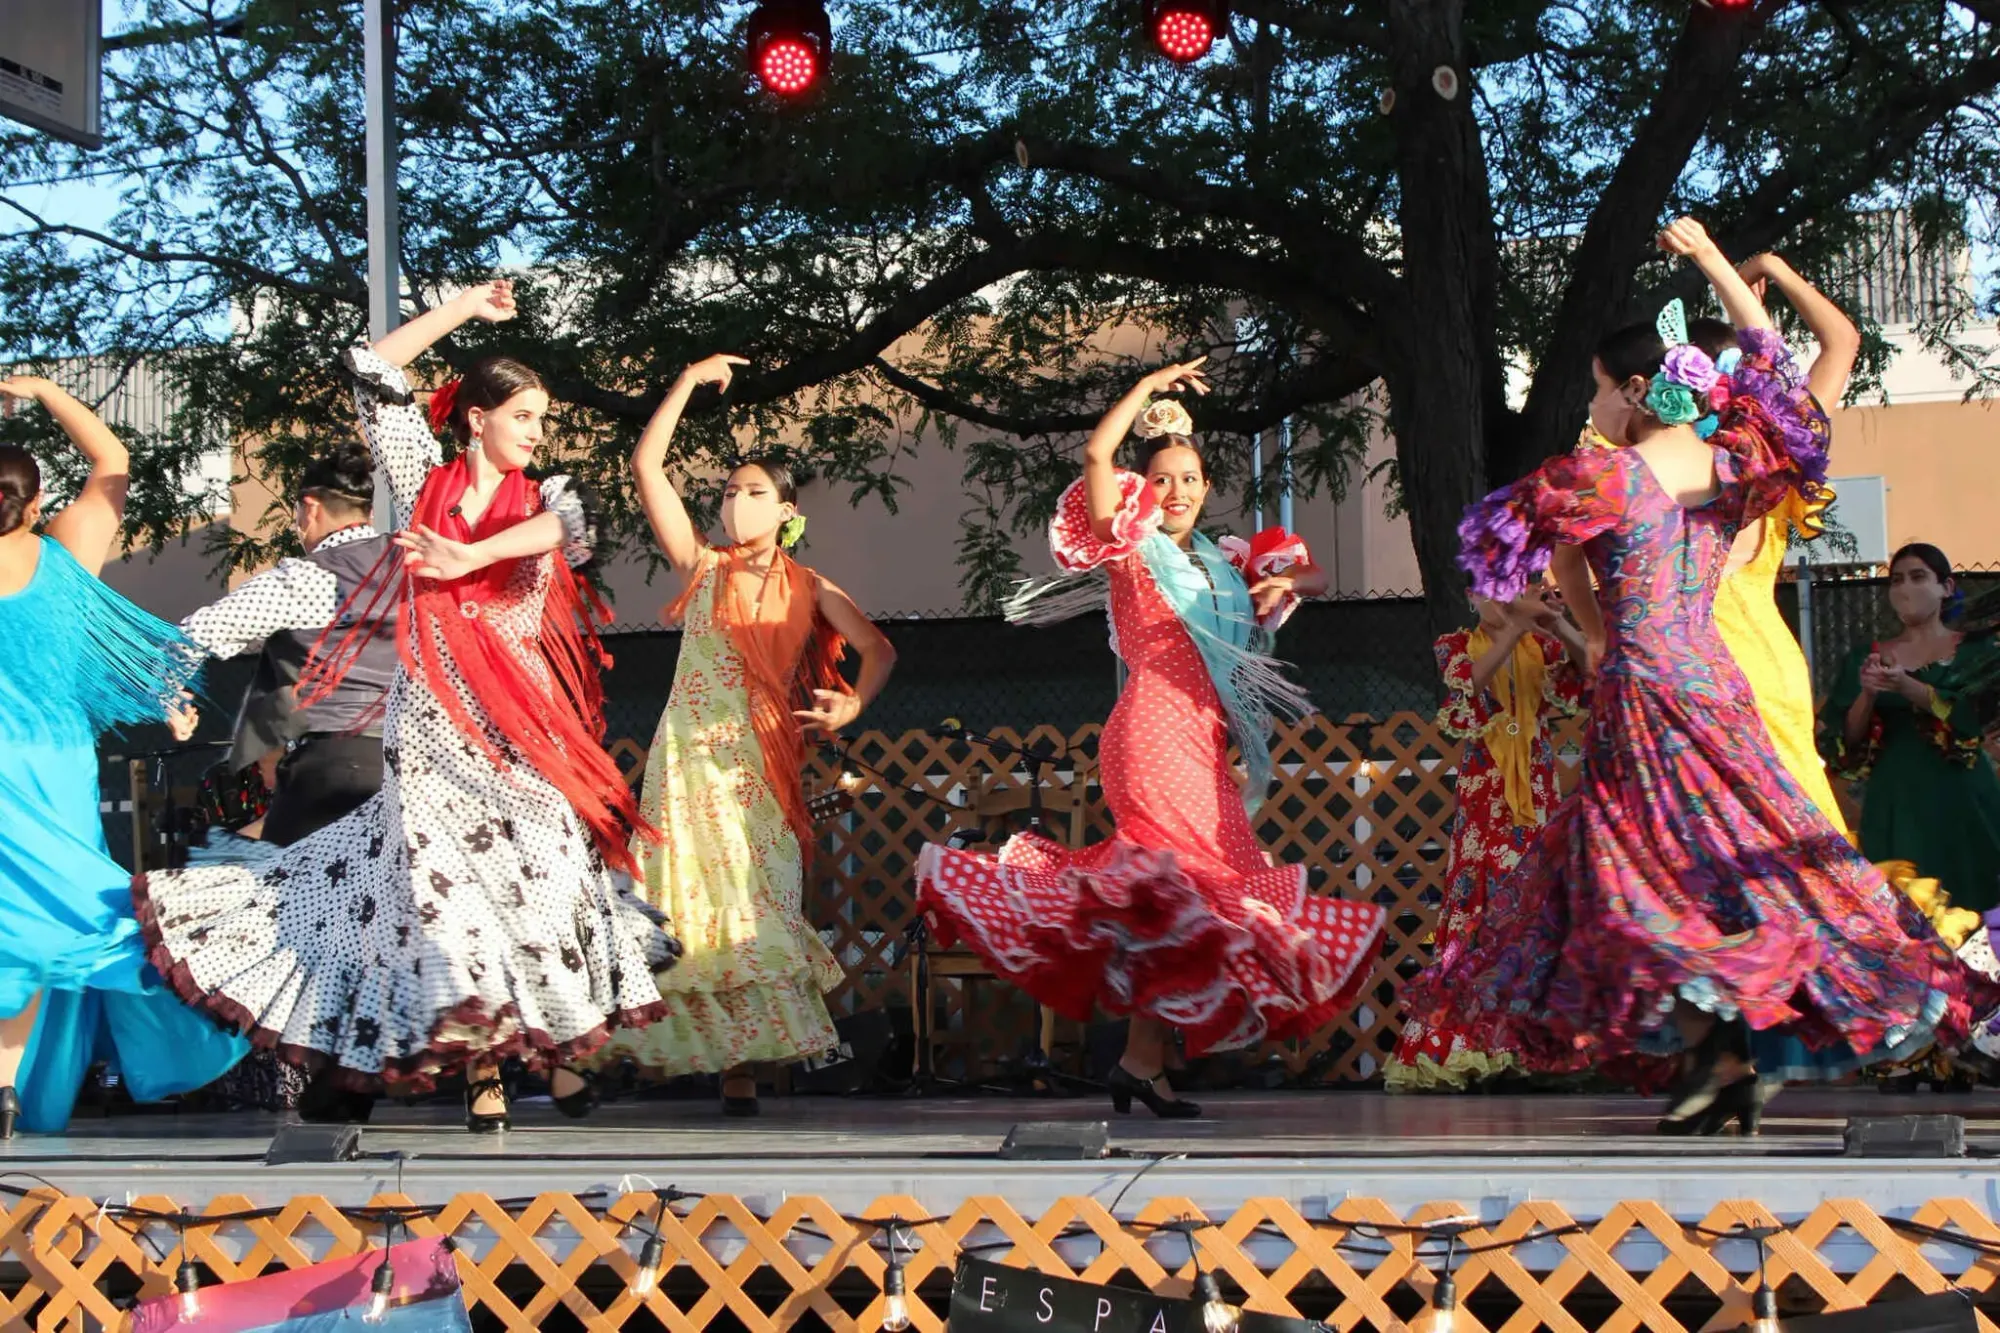 The Flamenco Fiesta